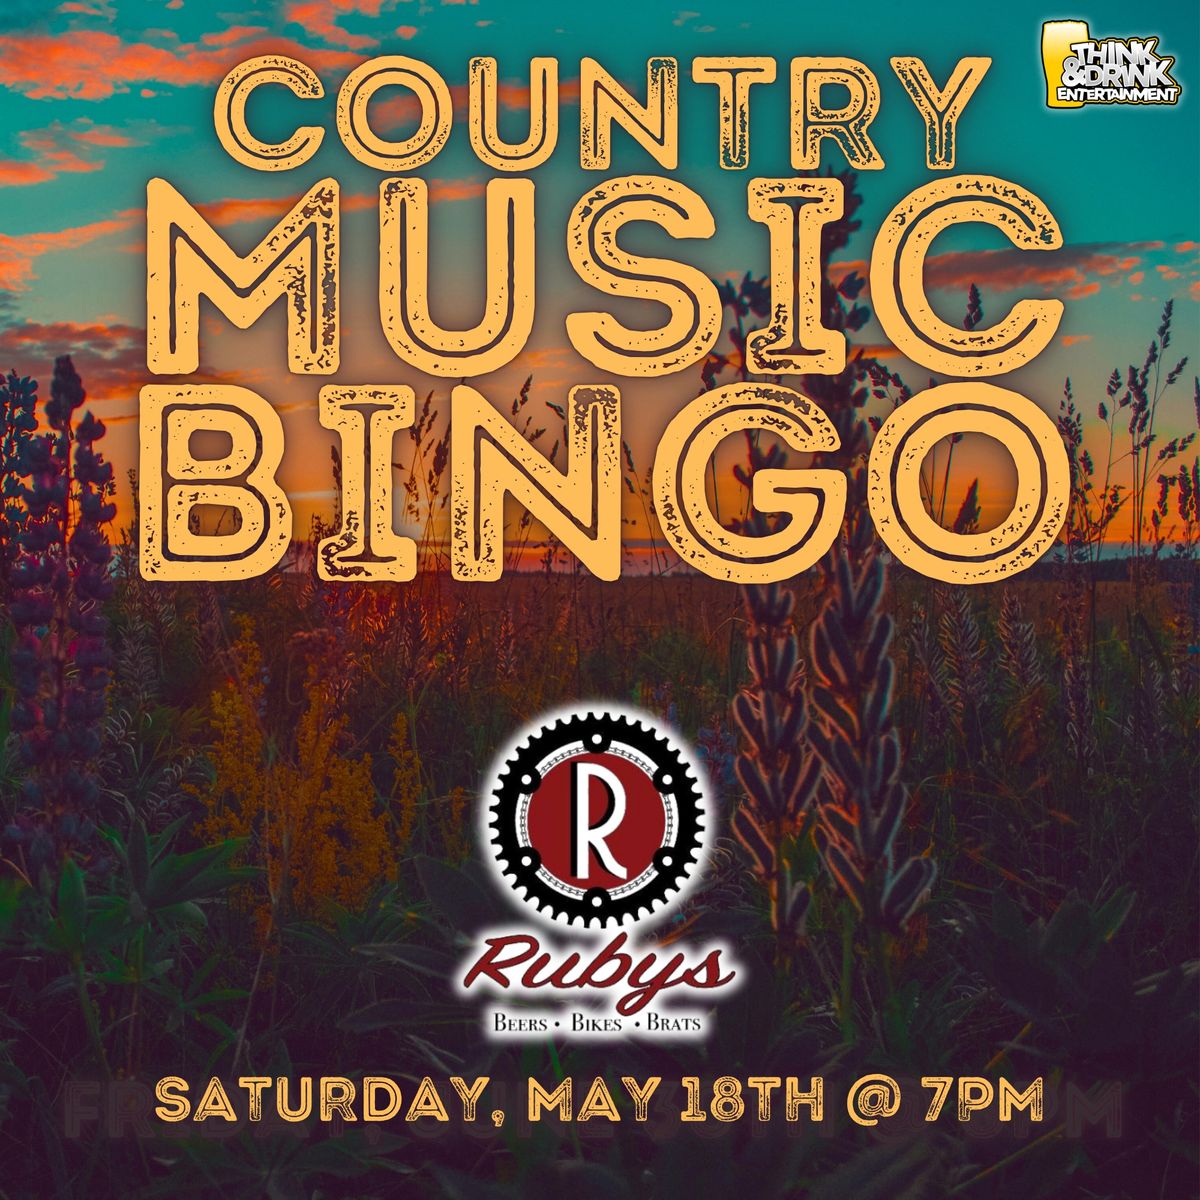 Country Music Bingo @ Rubys Beers Bikes & Brats (Davenport, IA) \/ Saturday, May 18th @ 7pm